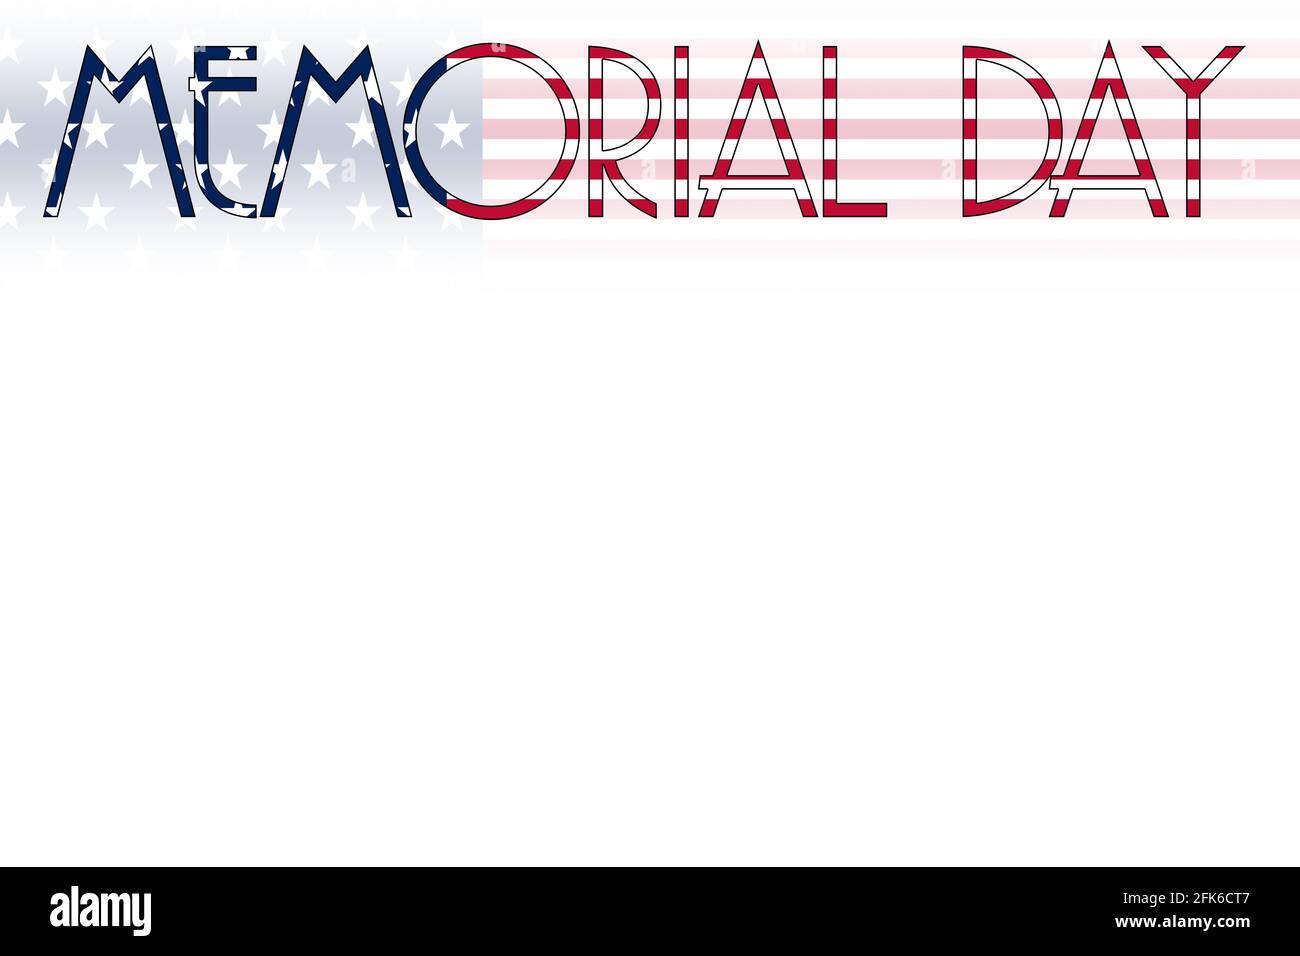 memorial day heading text banner background presentation card illustration slide Stock Photo